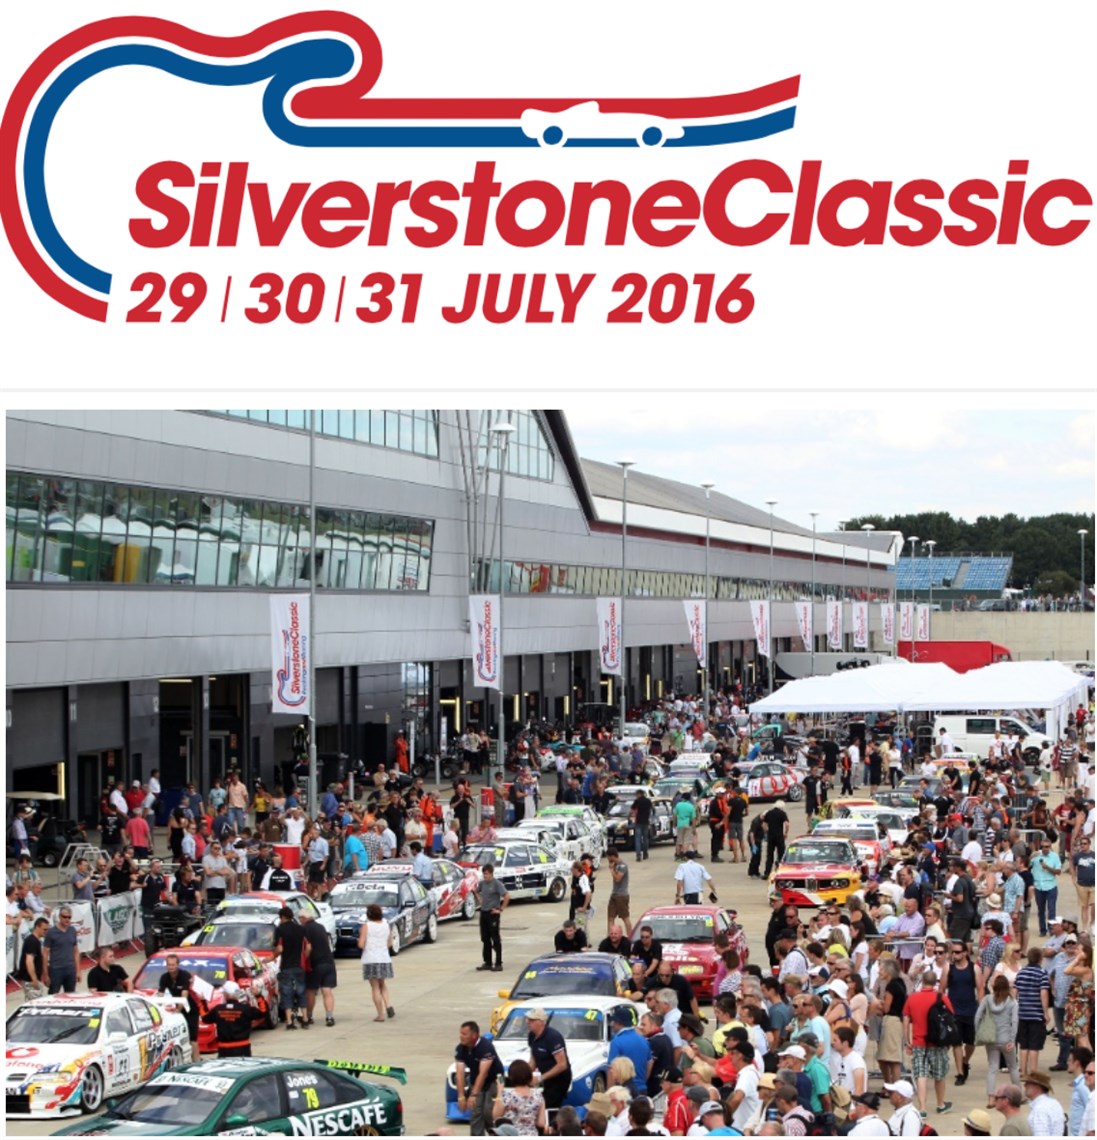 silverstone-classic-tickets-already-on-sale-f